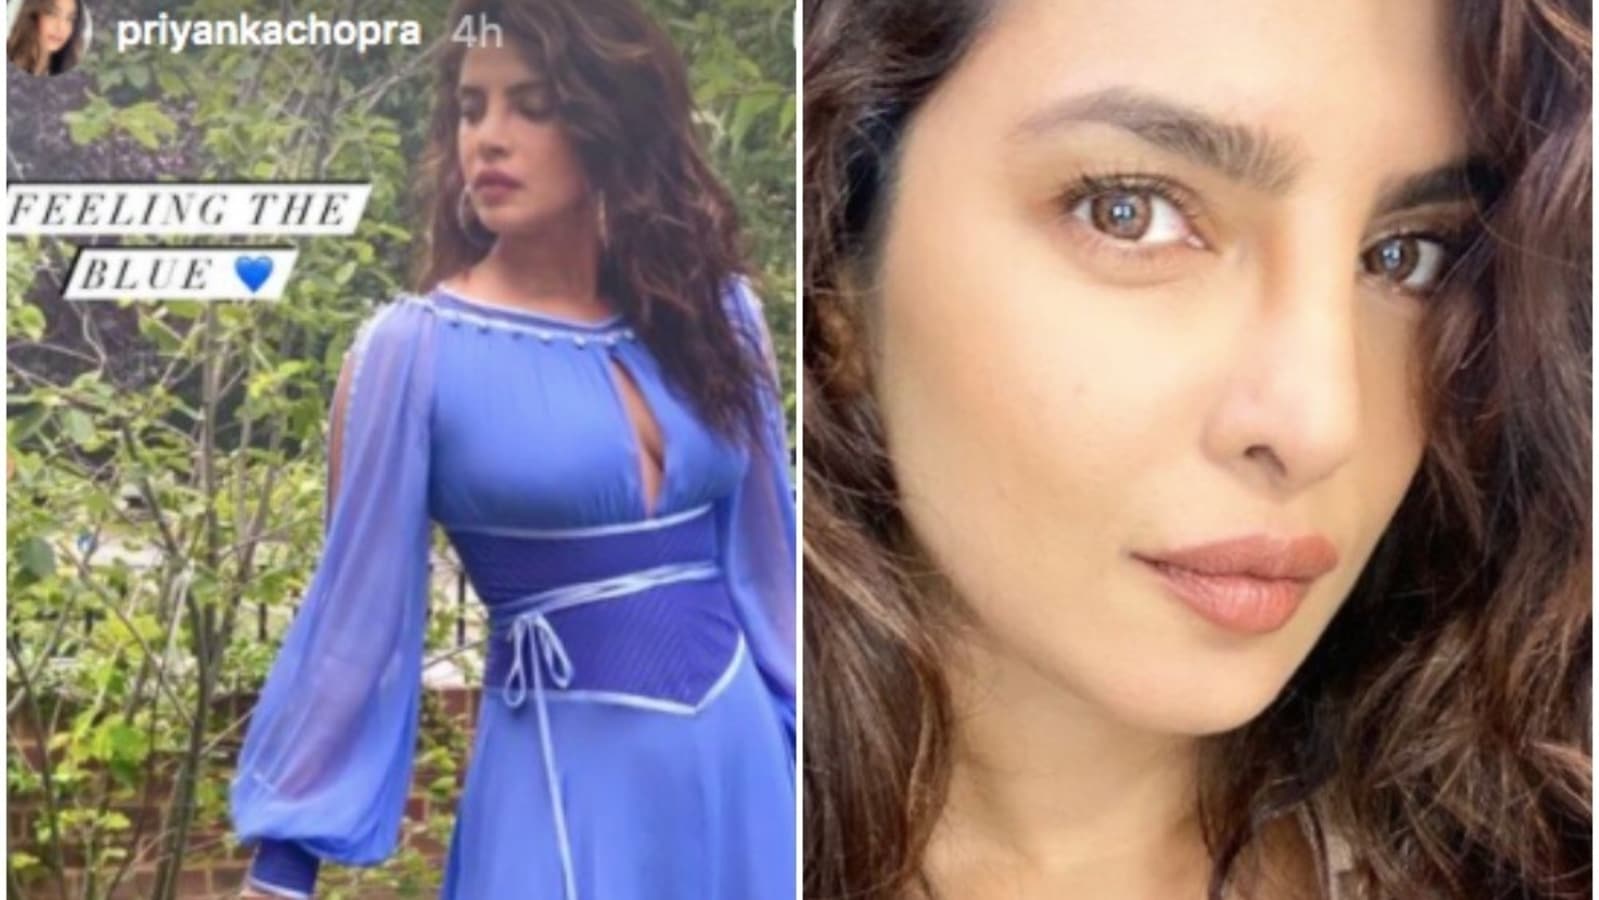 Priyanka Chopra Ki Suhagrat - Priyanka Chopra shares new selfie, and Nick Jonas can't get over how 'hot'  she looks. See here | Bollywood - Hindustan Times